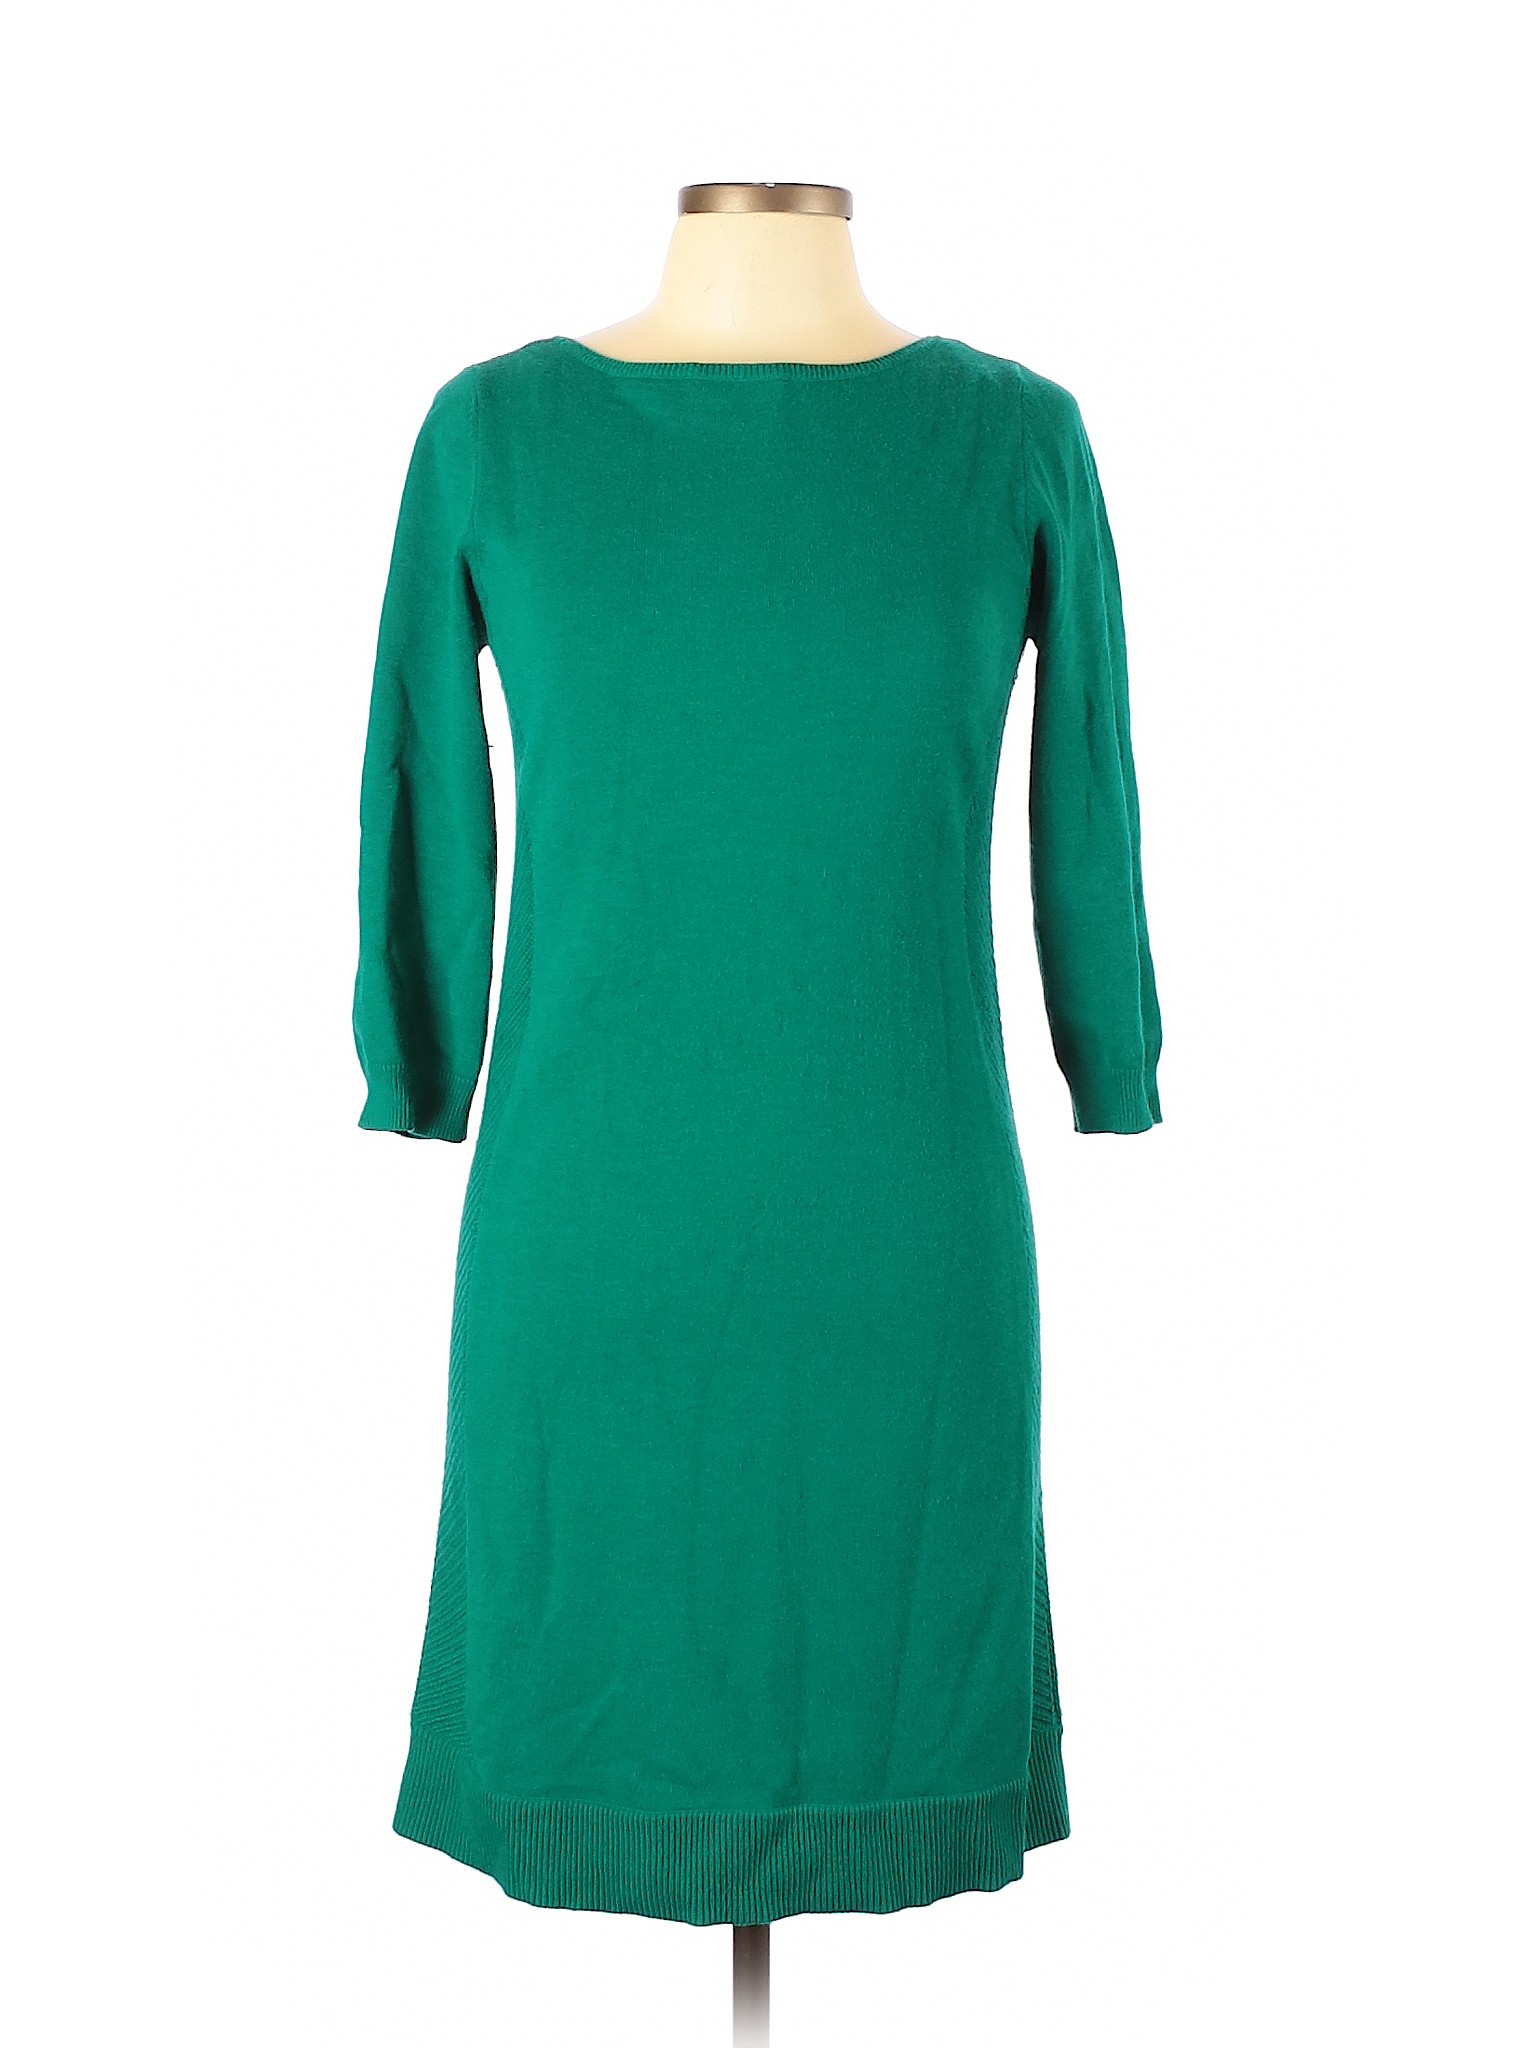 Ann Taylor Women Green Casual Dress M | eBay